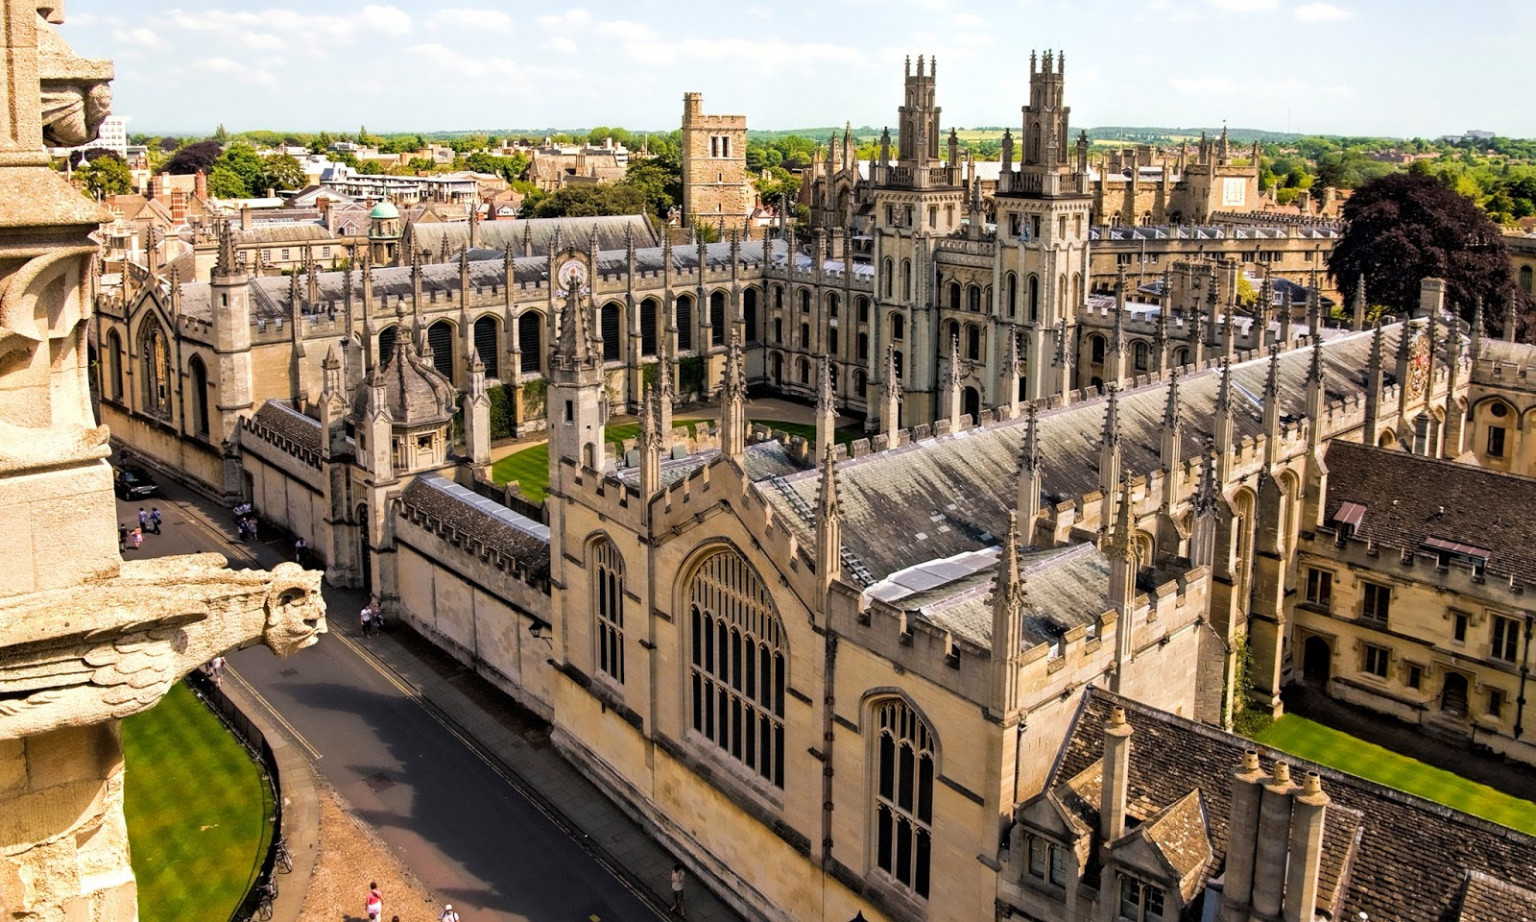 Oxford University, Oxfordshire